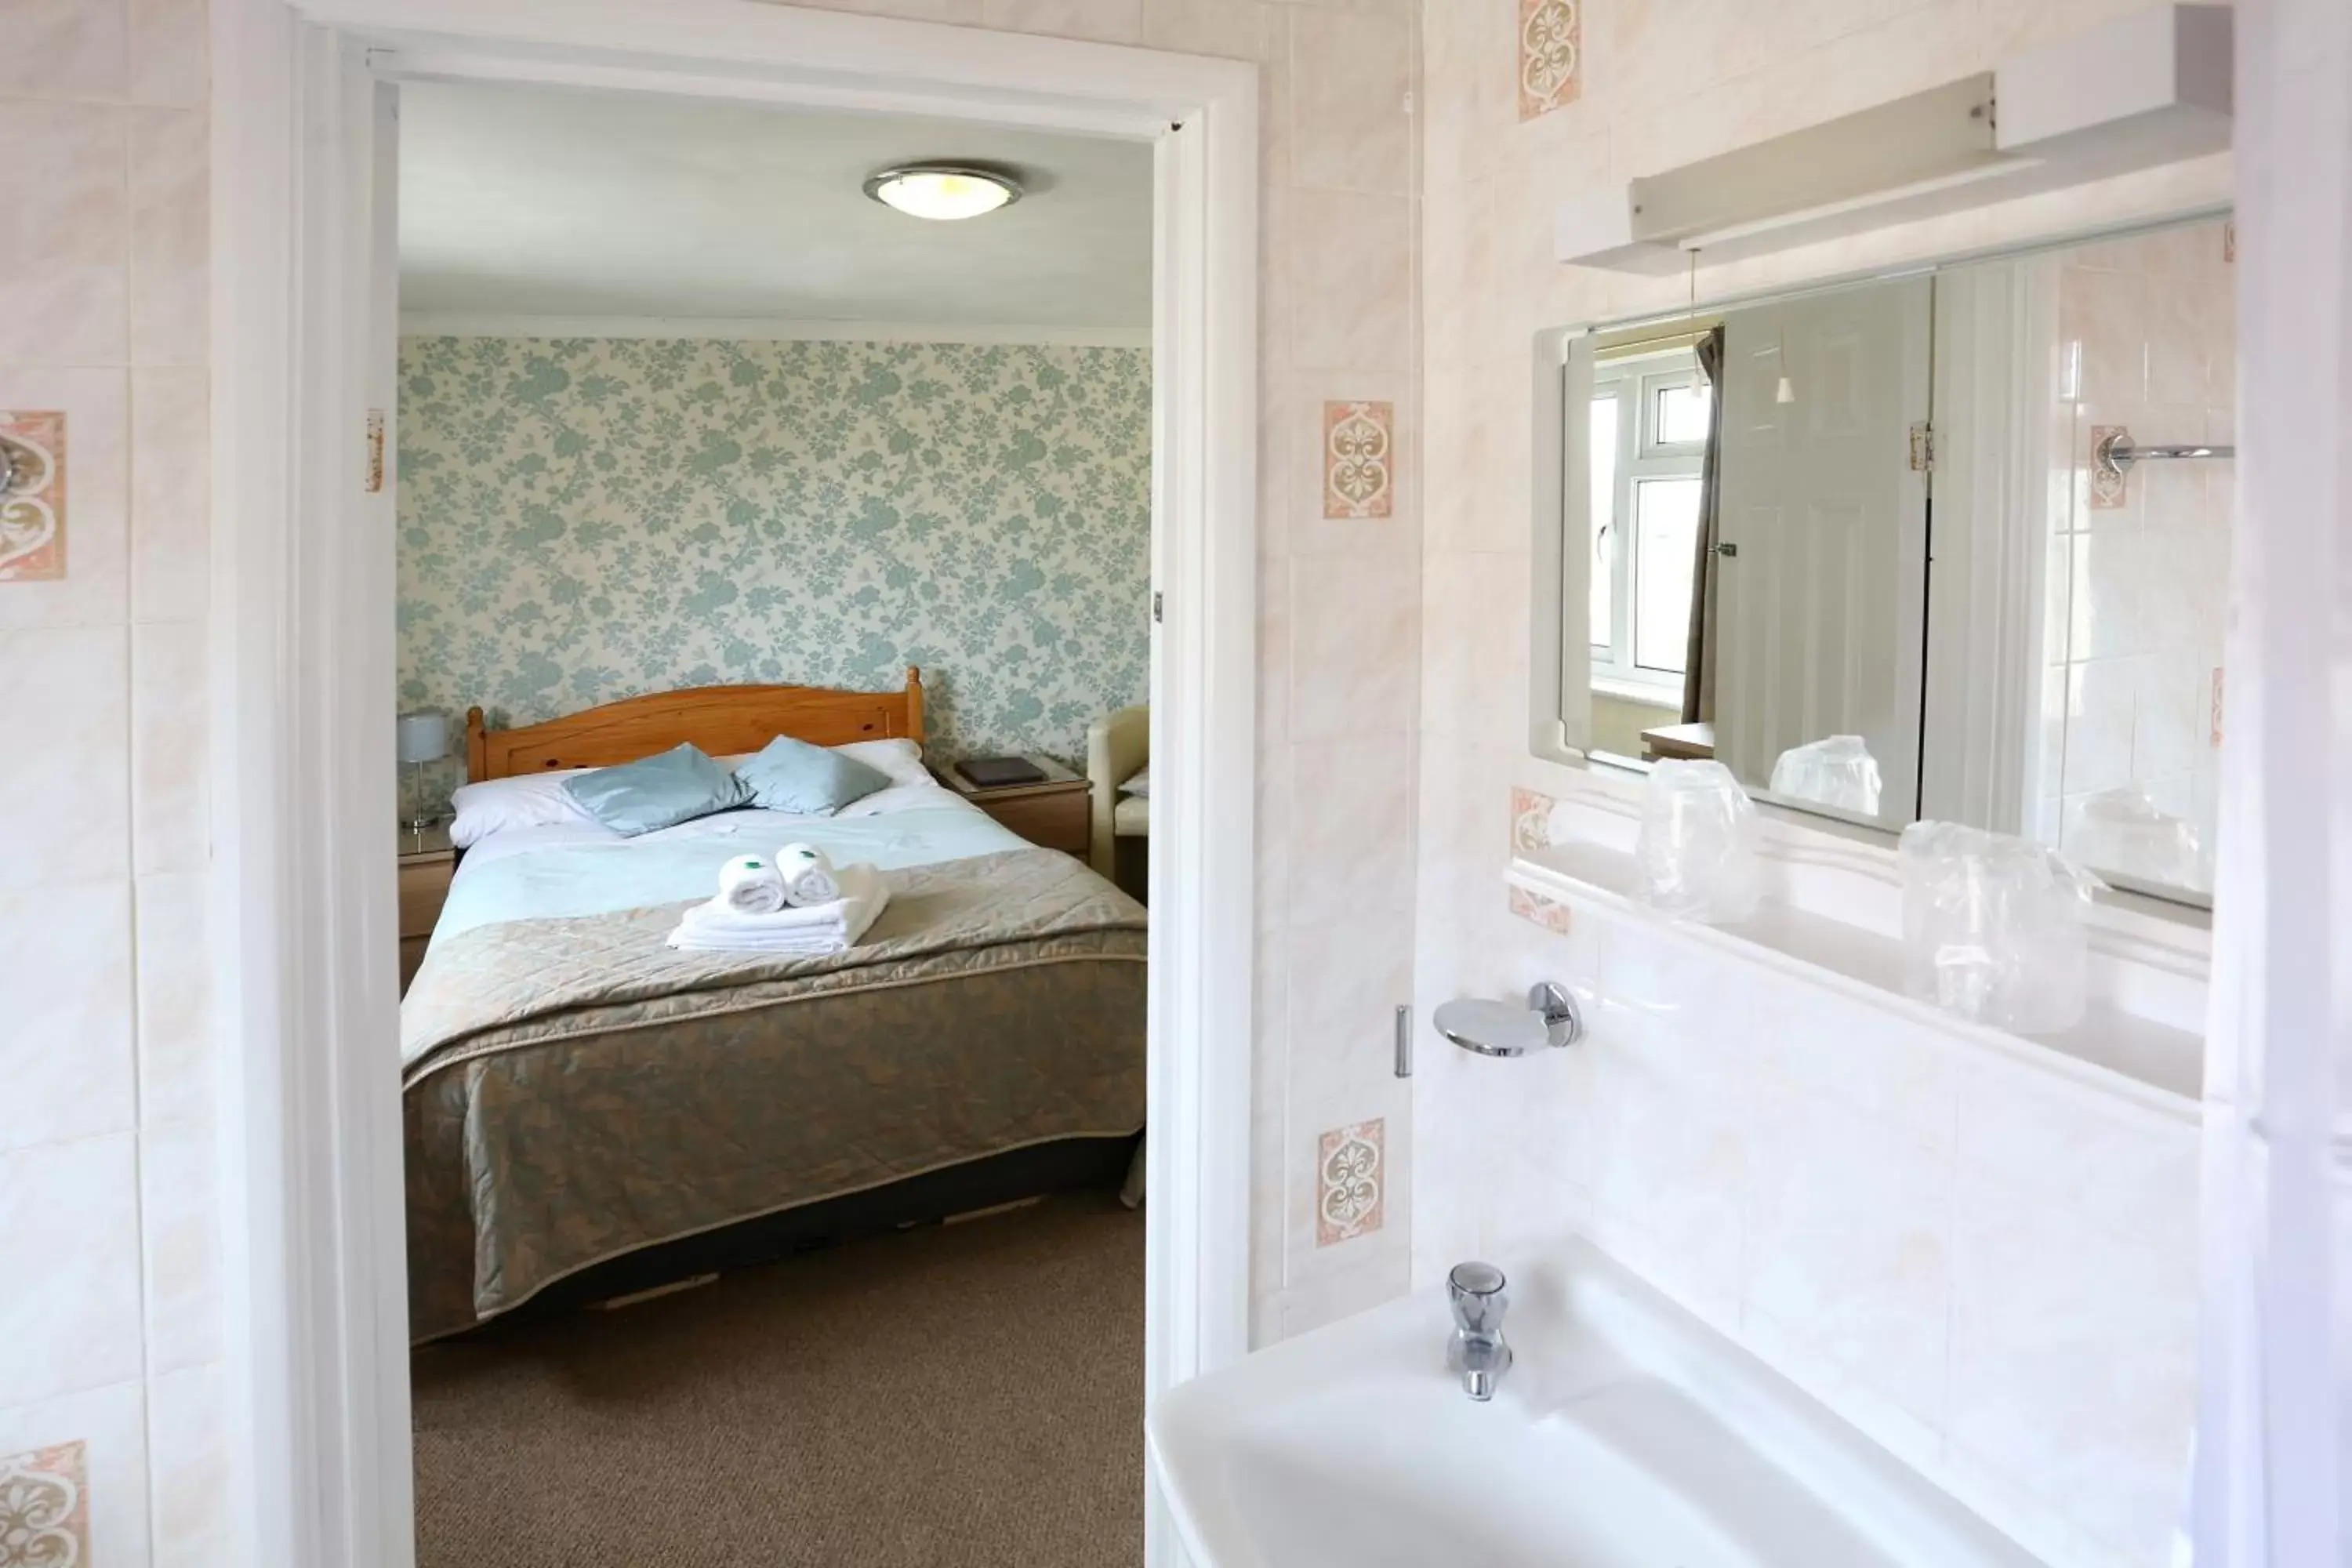 Decorative detail, Bathroom in Dorset Hotel, Isle of Wight